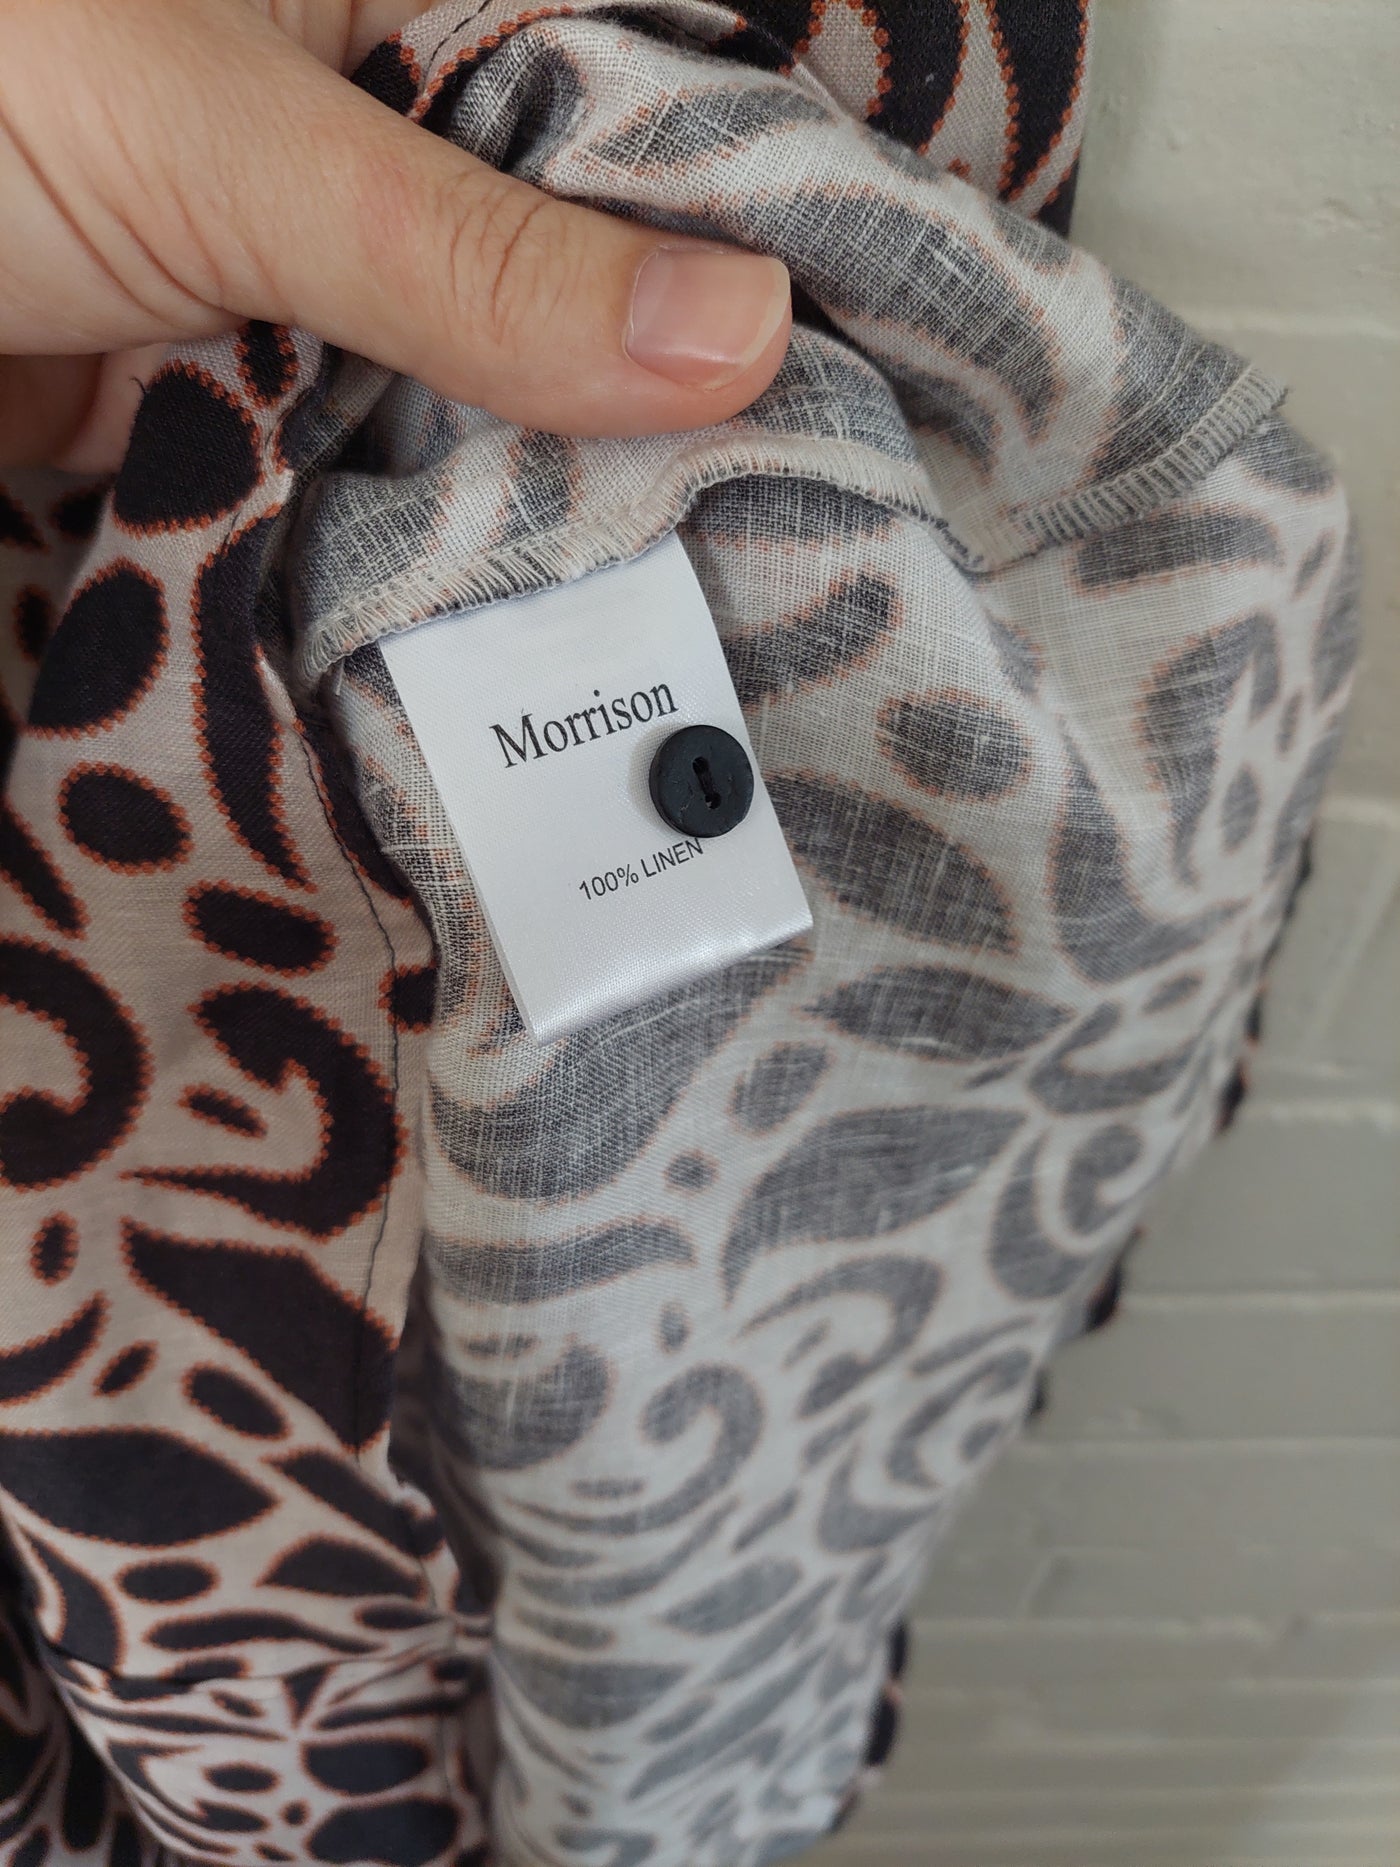 Exclusive Morrison Print 100% Linen Midi Dress, Size 3 (12 / M)